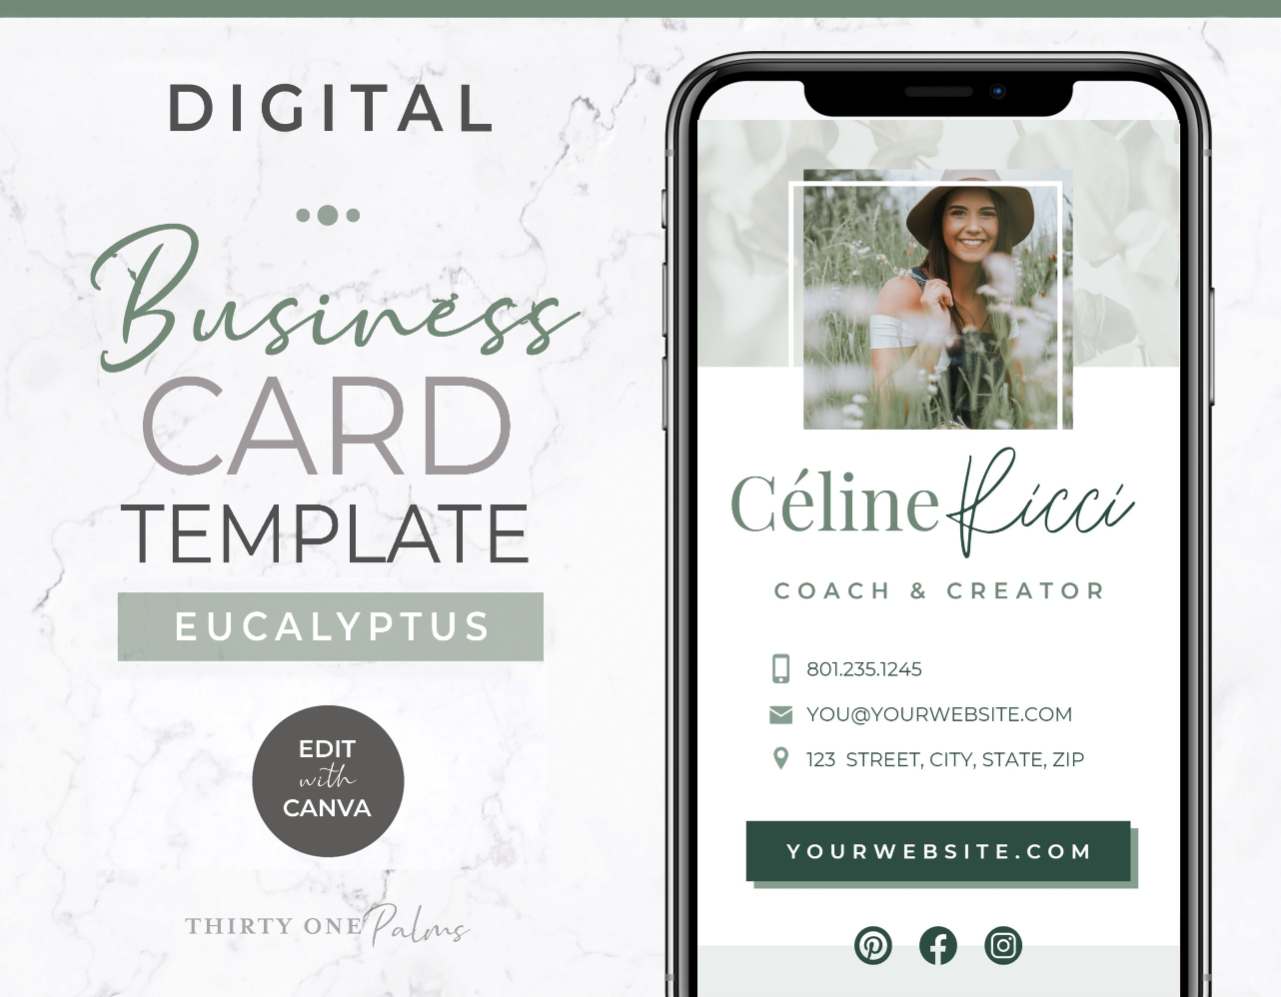 Digital Business Card Template for Canva – Eucalyptus